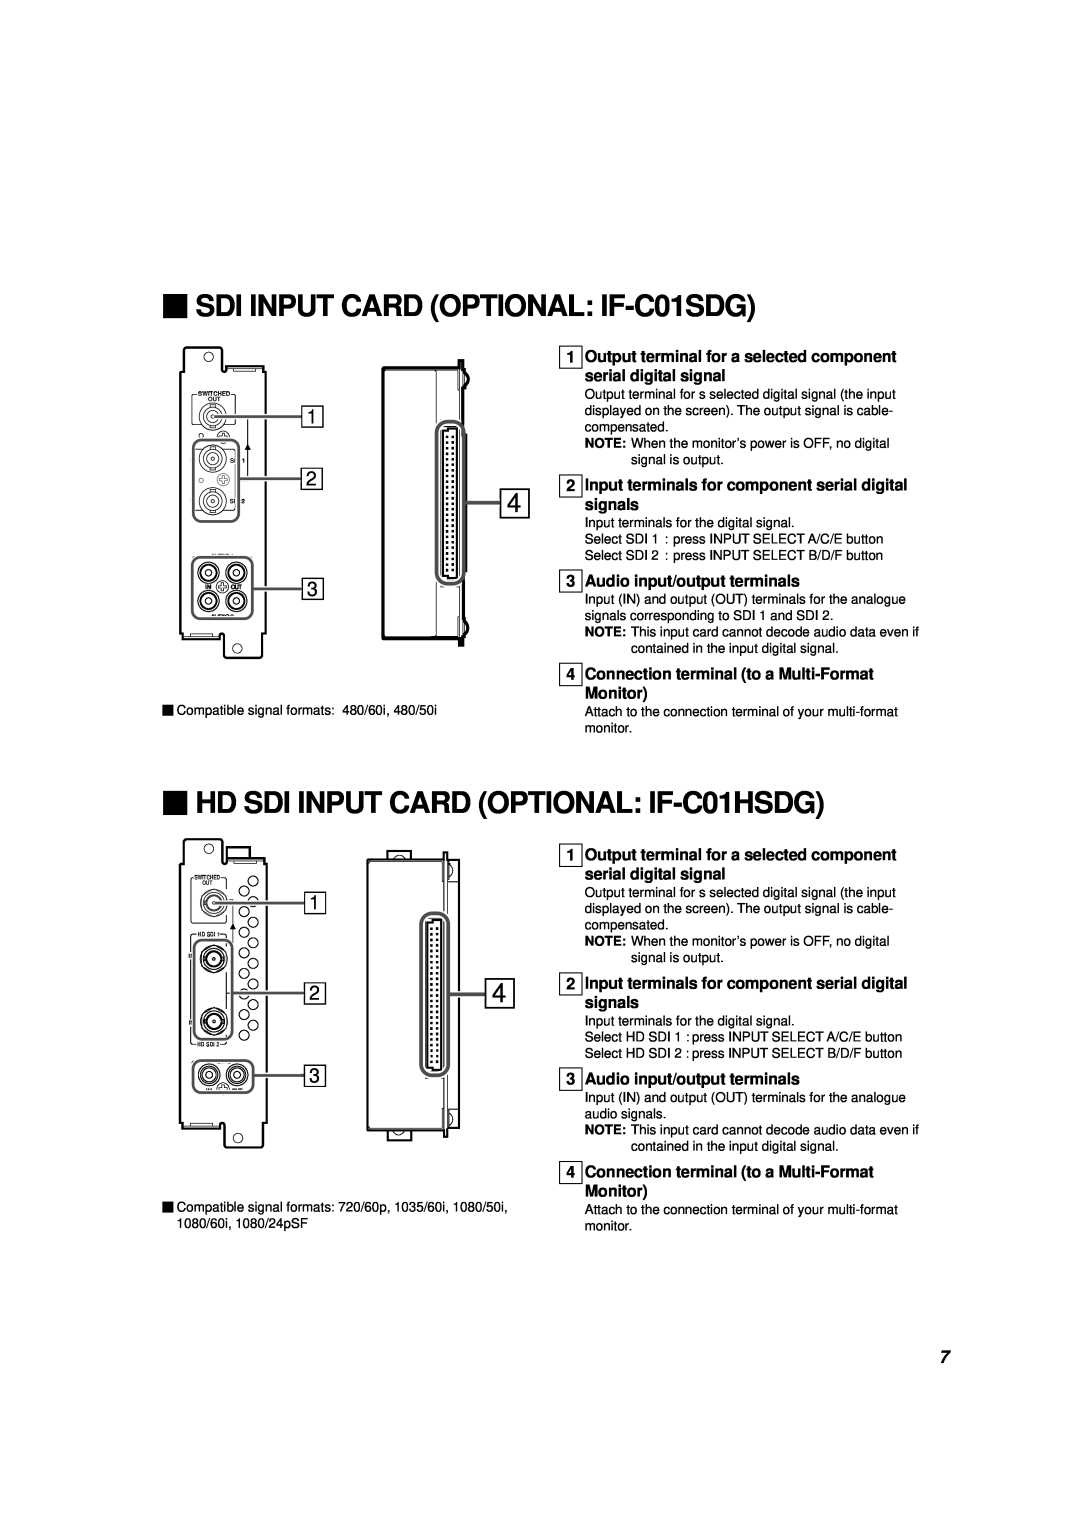 JVC V1700CG  SDI INPUT CARD OPTIONAL IF-C01SDG,  HD SDI INPUT CARD OPTIONAL IF-C01HSDG, Audio input/output terminals 